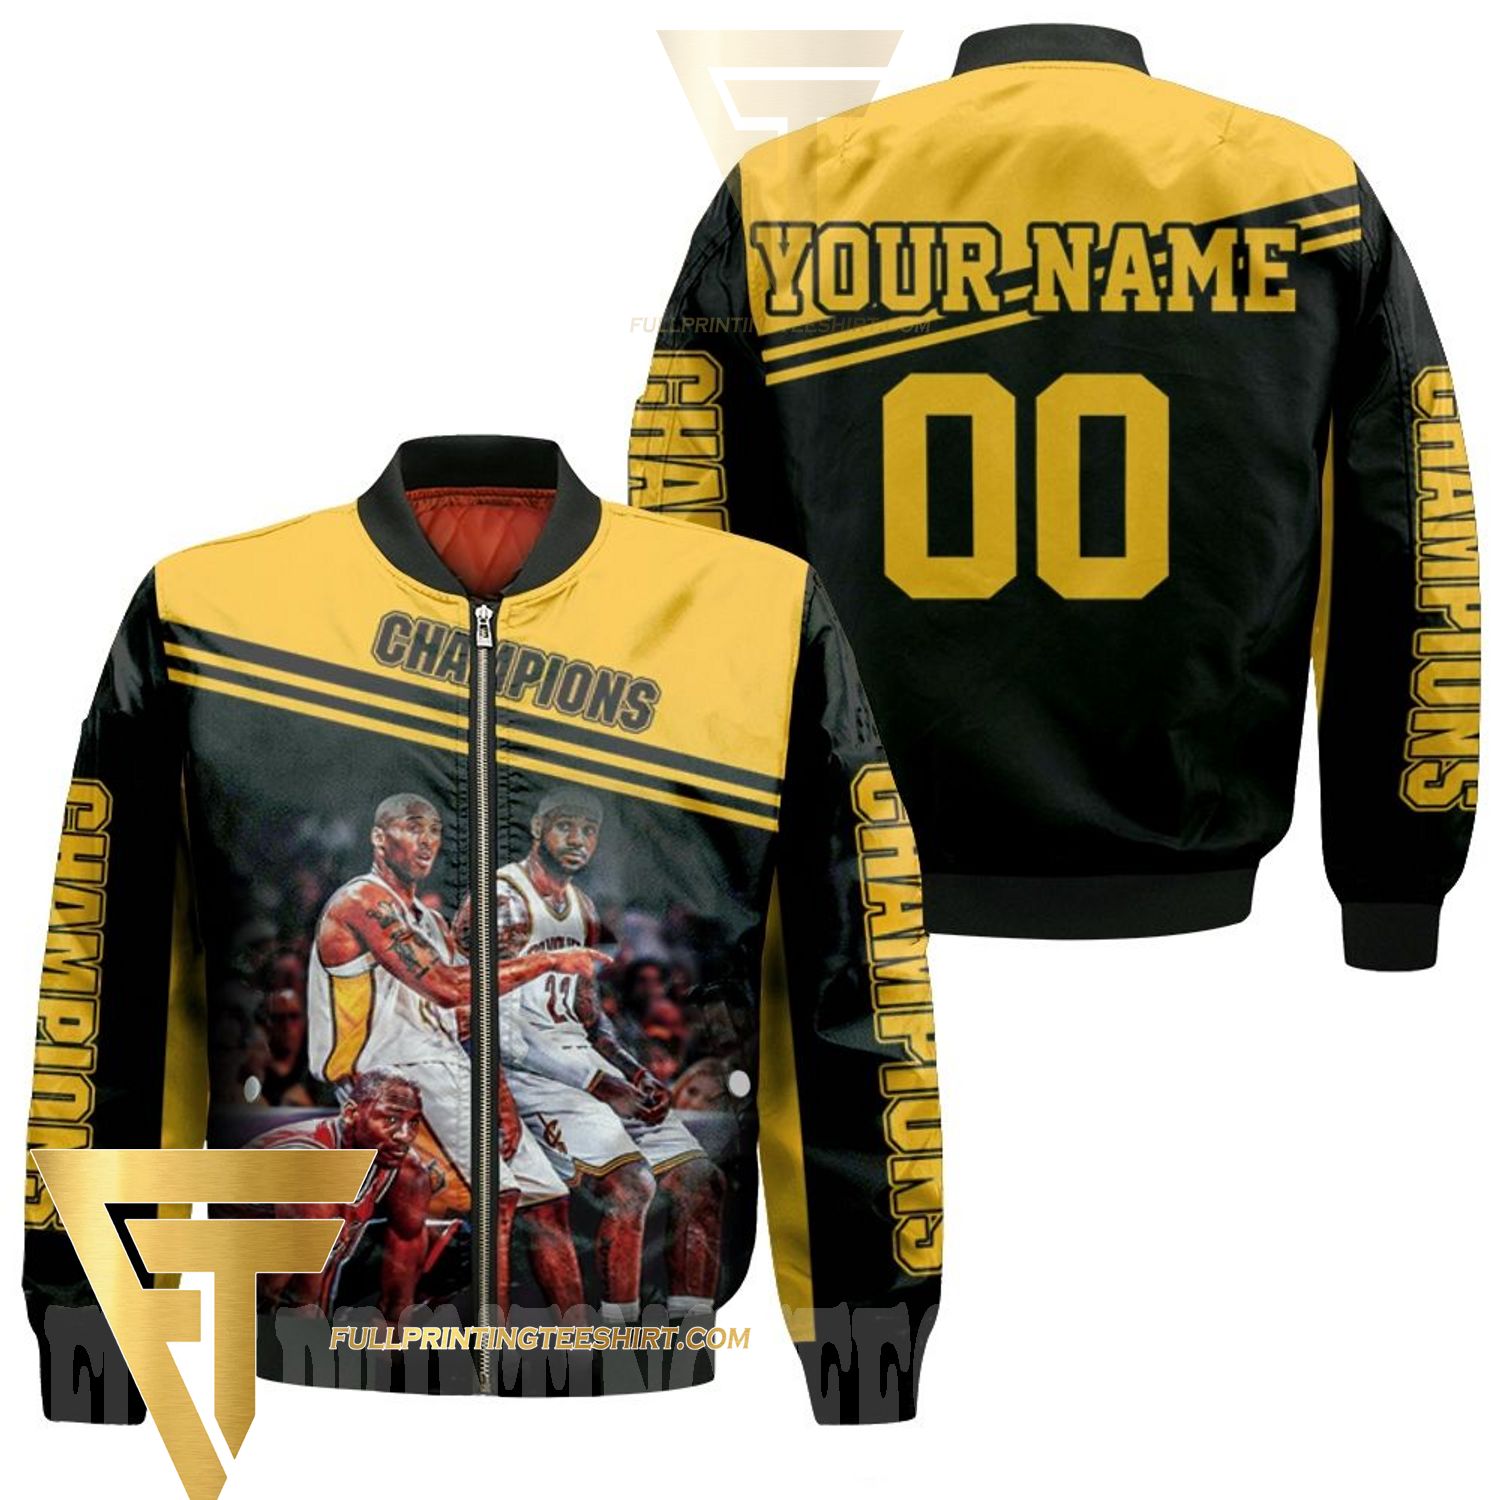 Buy Champion Kobe Bryant 8 24 shirt For Free Shipping CUSTOM XMAS PRODUCT  COMPANY